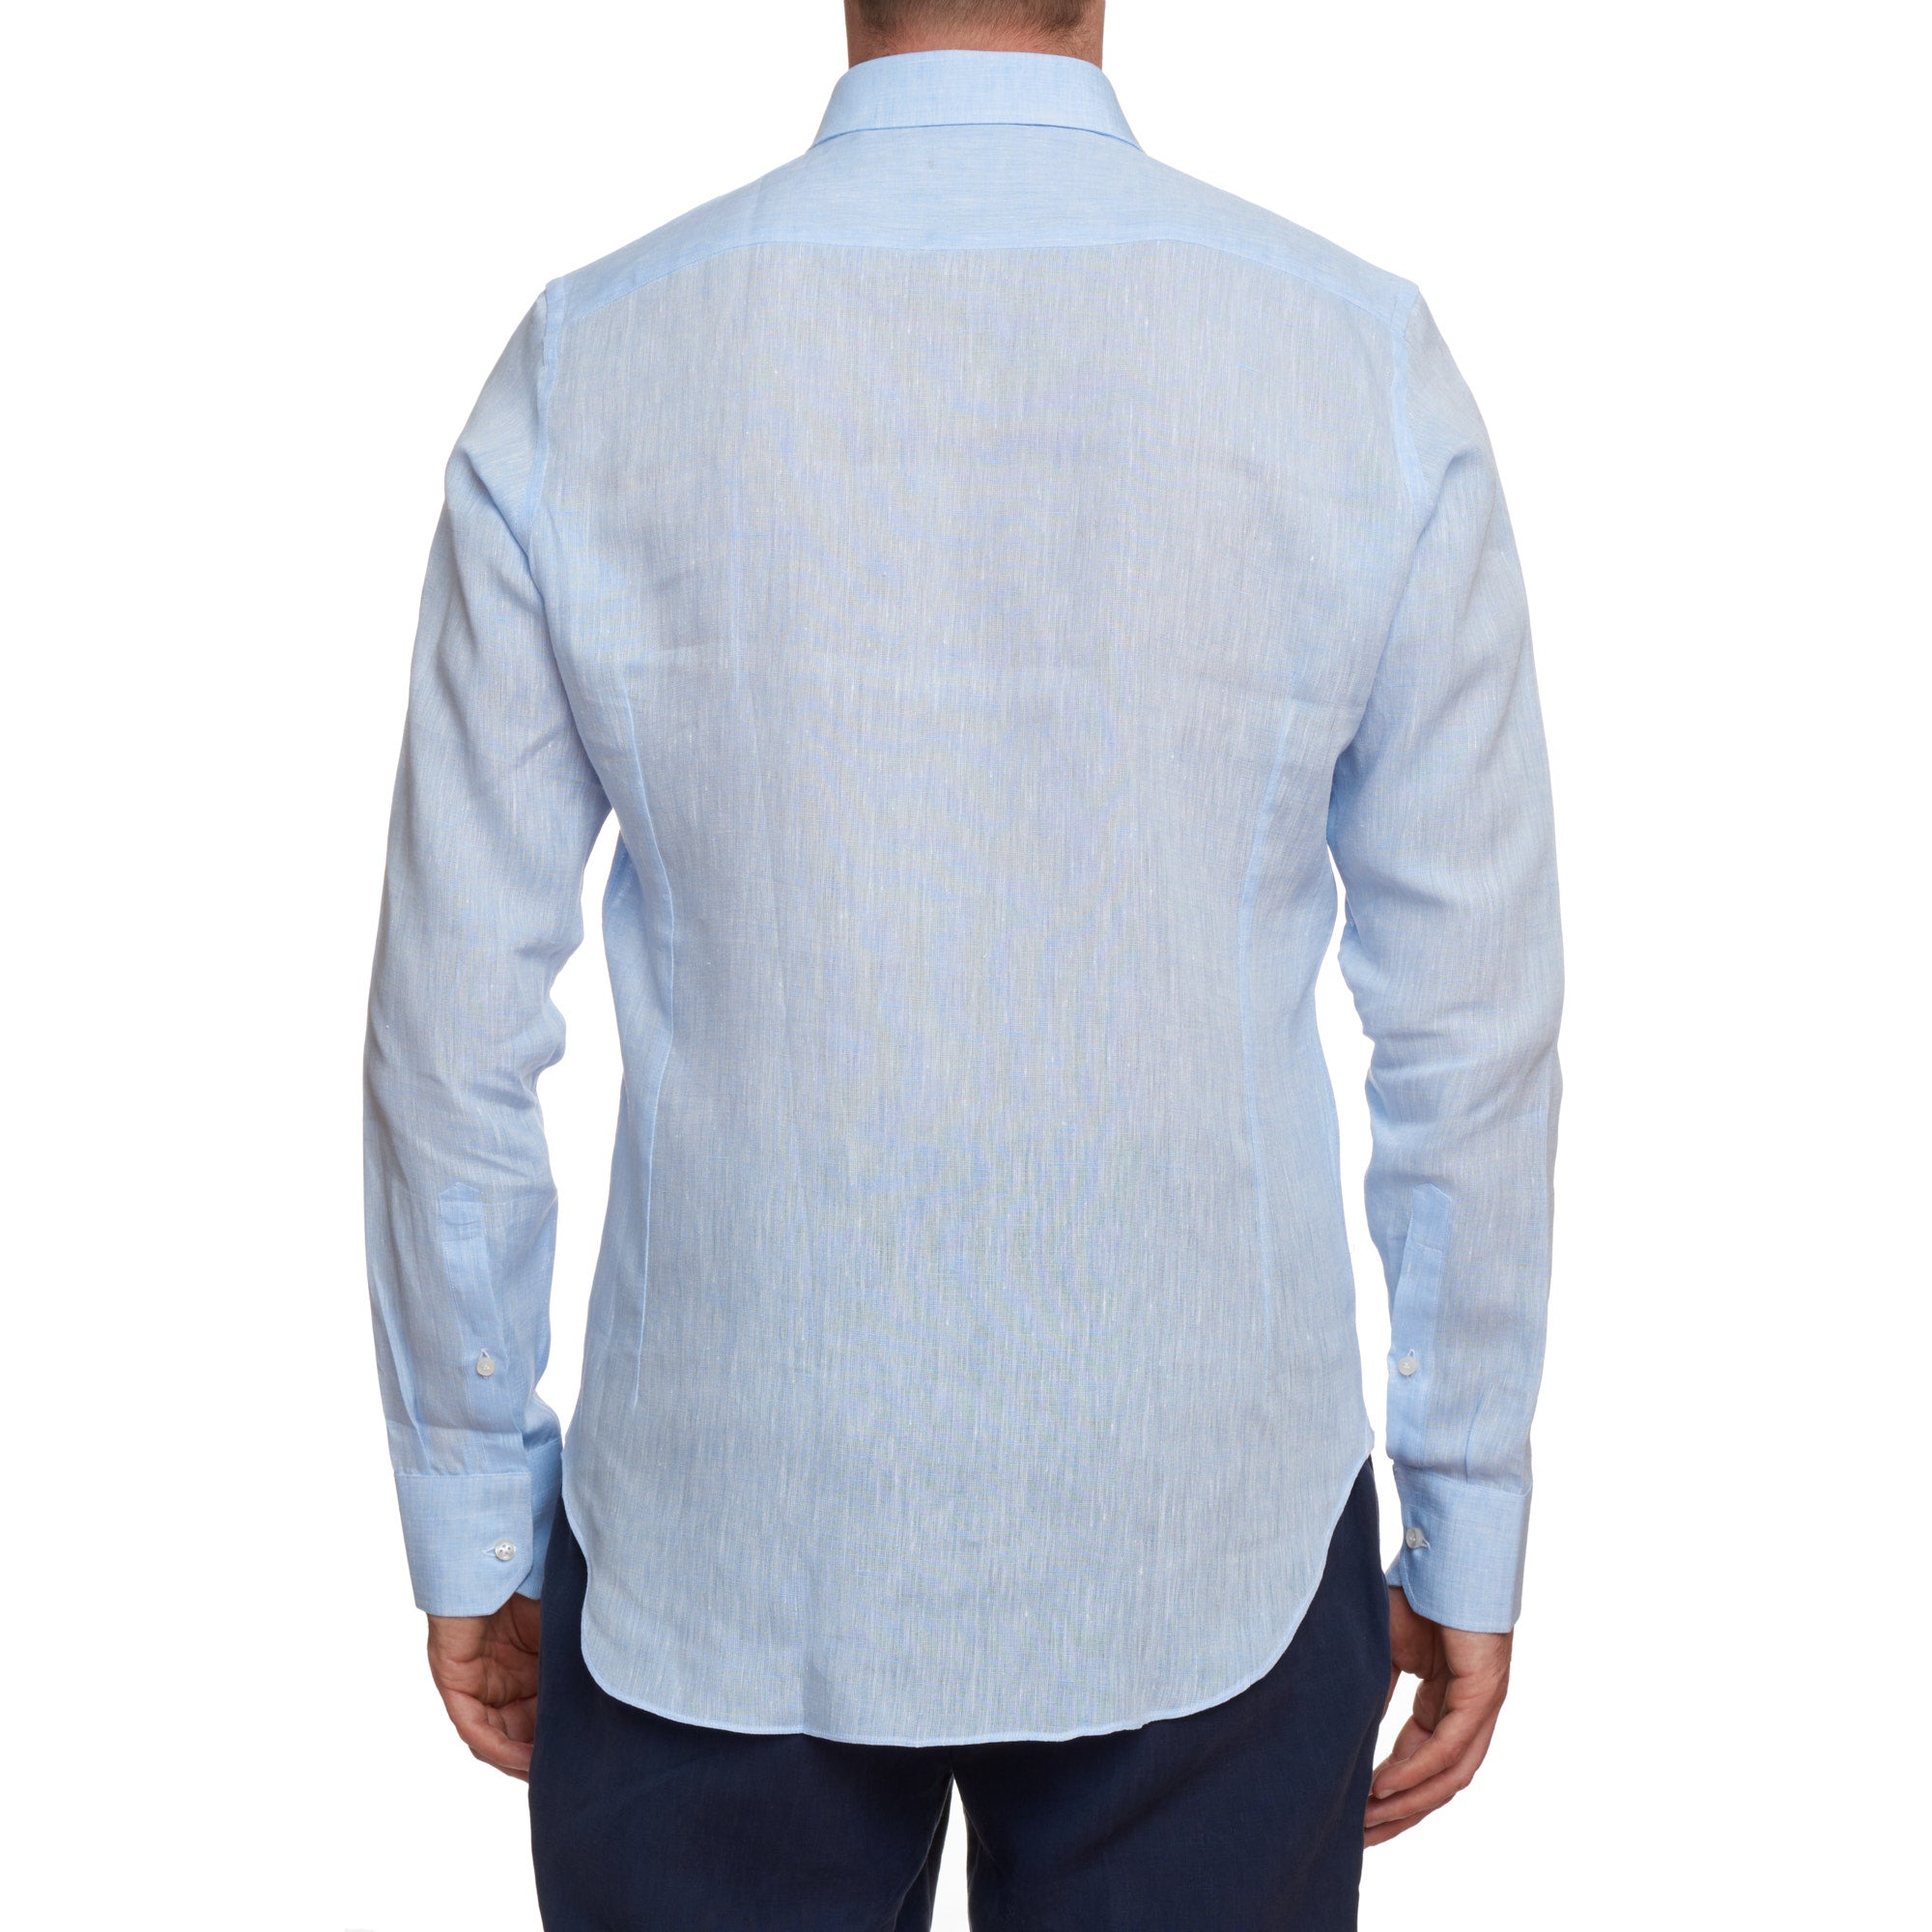 SARTORIO Napoli by KITON Light Blue Linen Spread Collar Shirt Slim Fit NEW SARTORIO